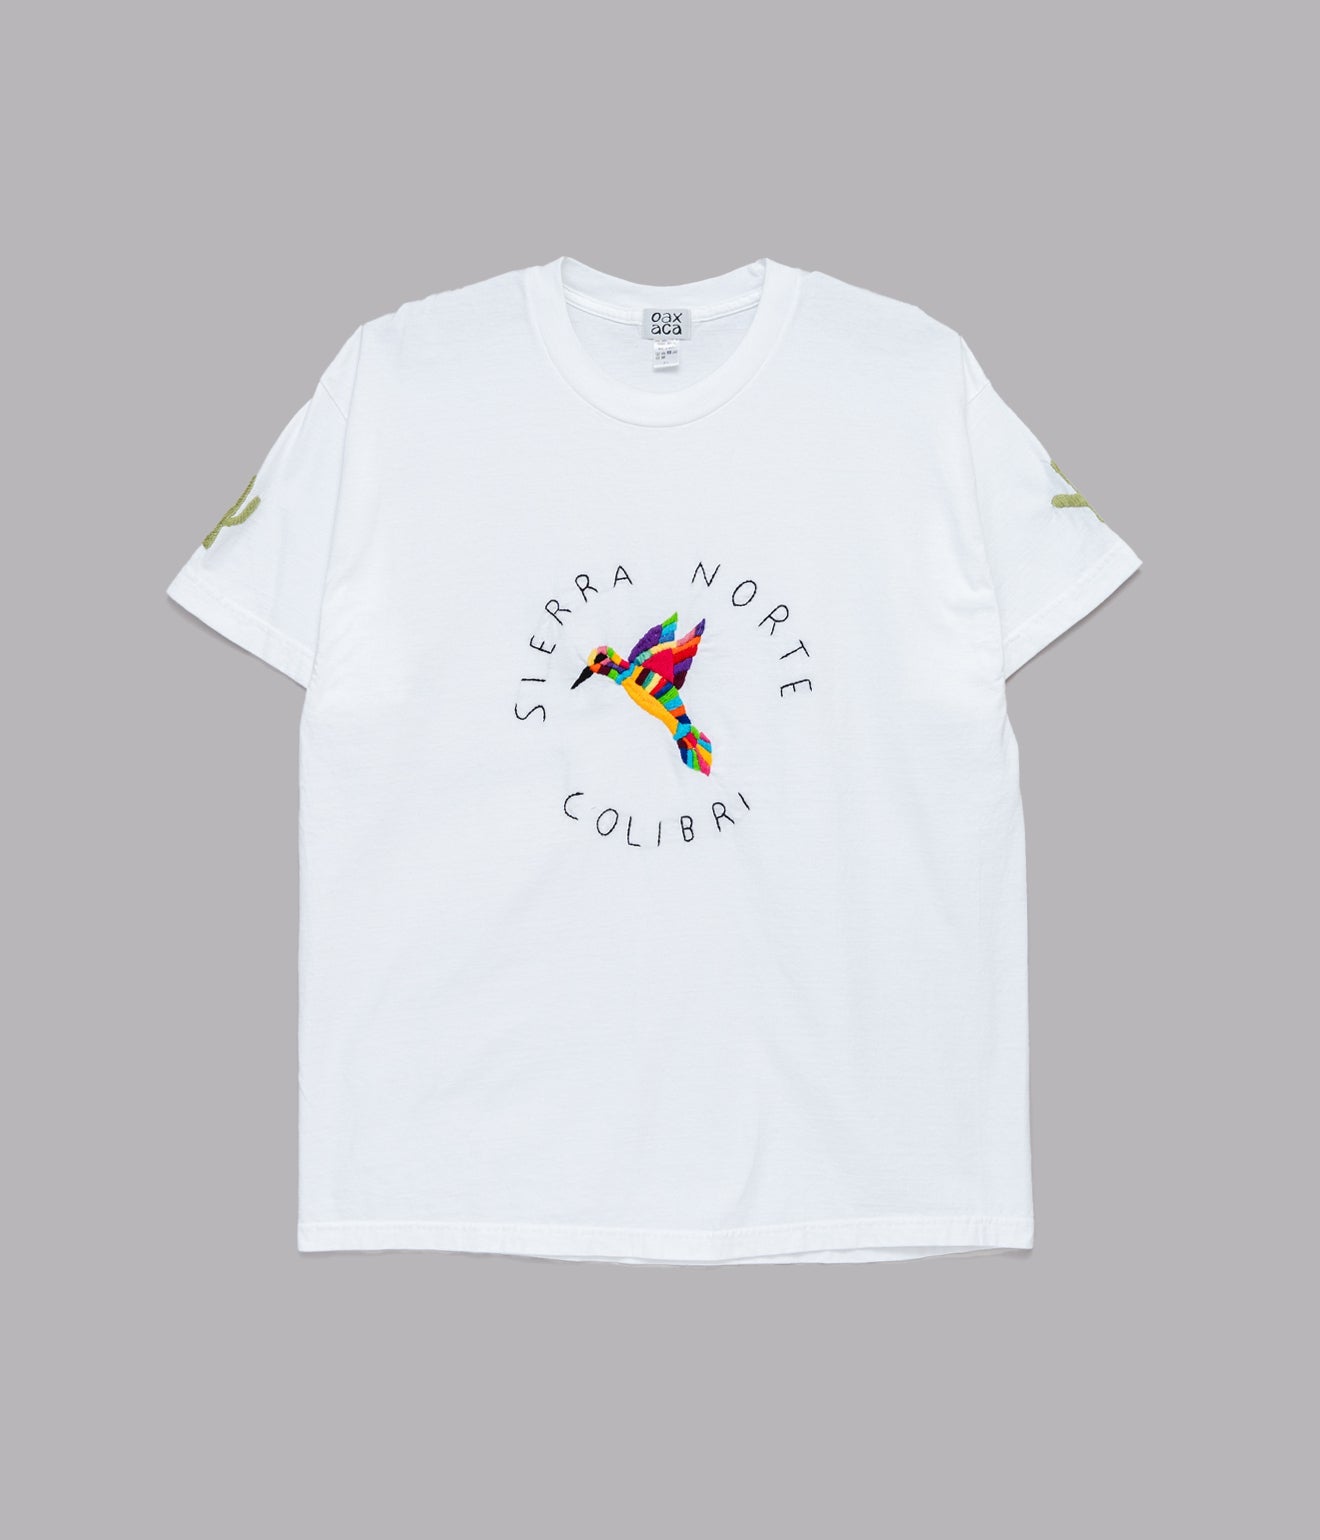 OAXACA "Embroidery T - Shirt" Colibri / XL - WEAREALLANIMALS